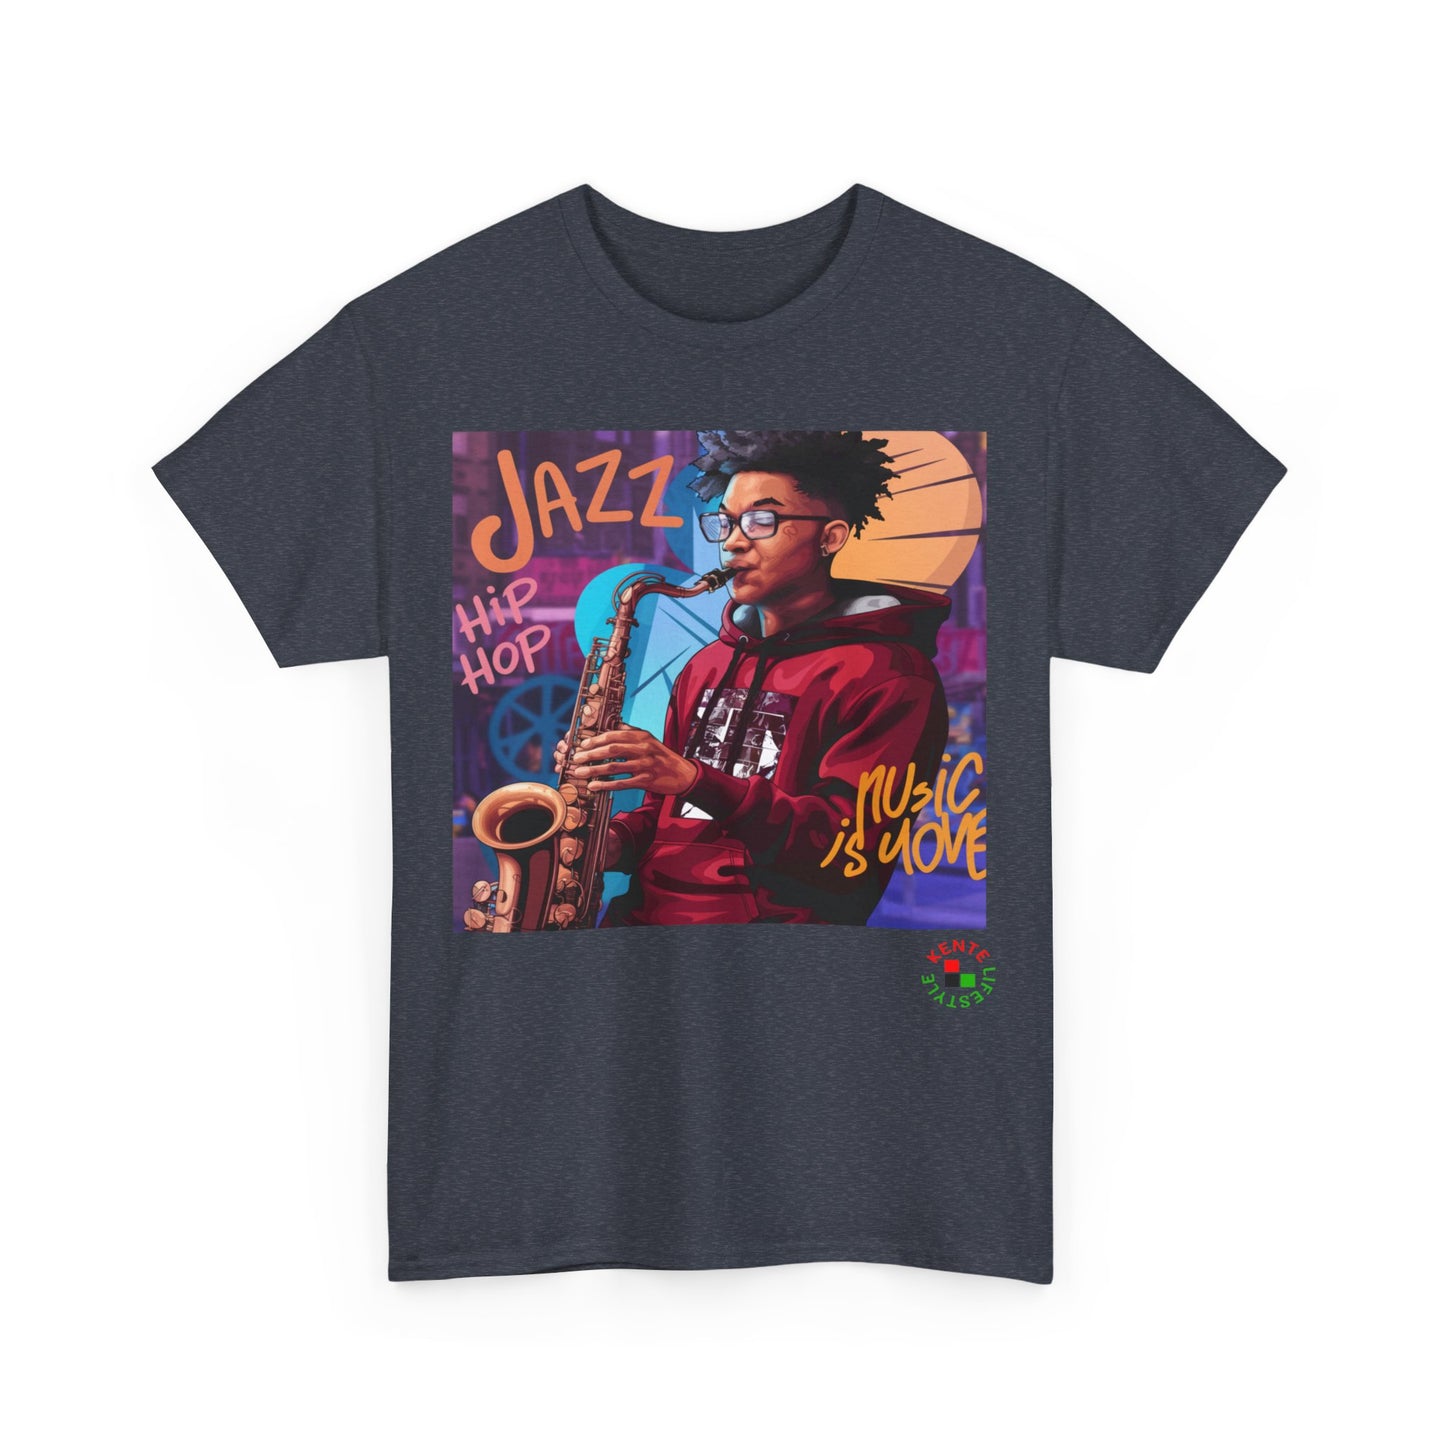 Jazz Music is Love - T-shirt